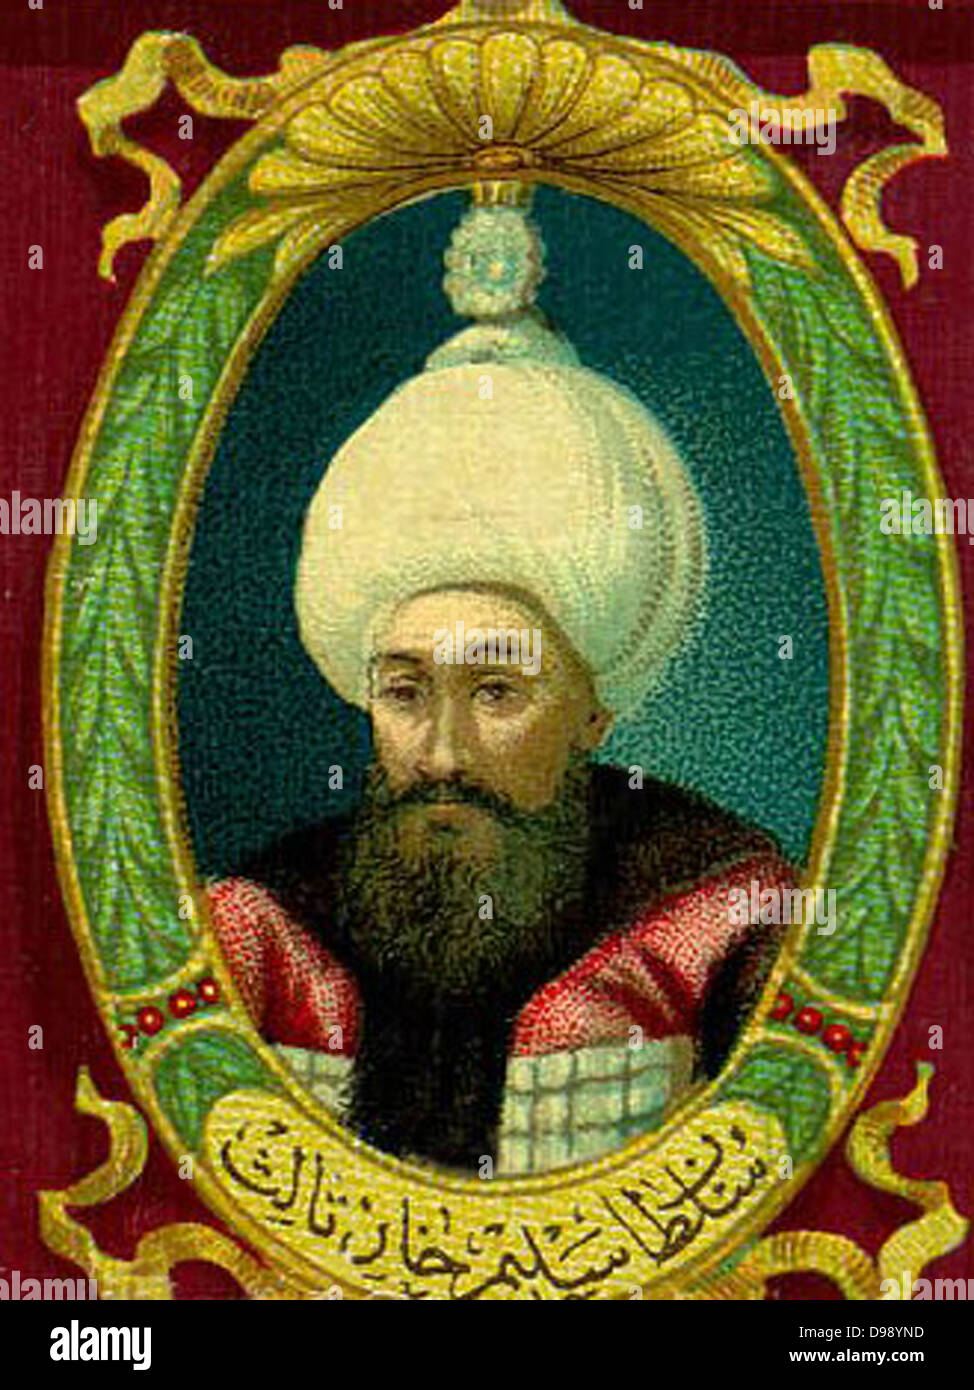 Селим iii. Селим 3 Султан Османской империи. Селим III (1789-1807)-. Правление Султана Селима 3. Селим III правитель Османской империи.